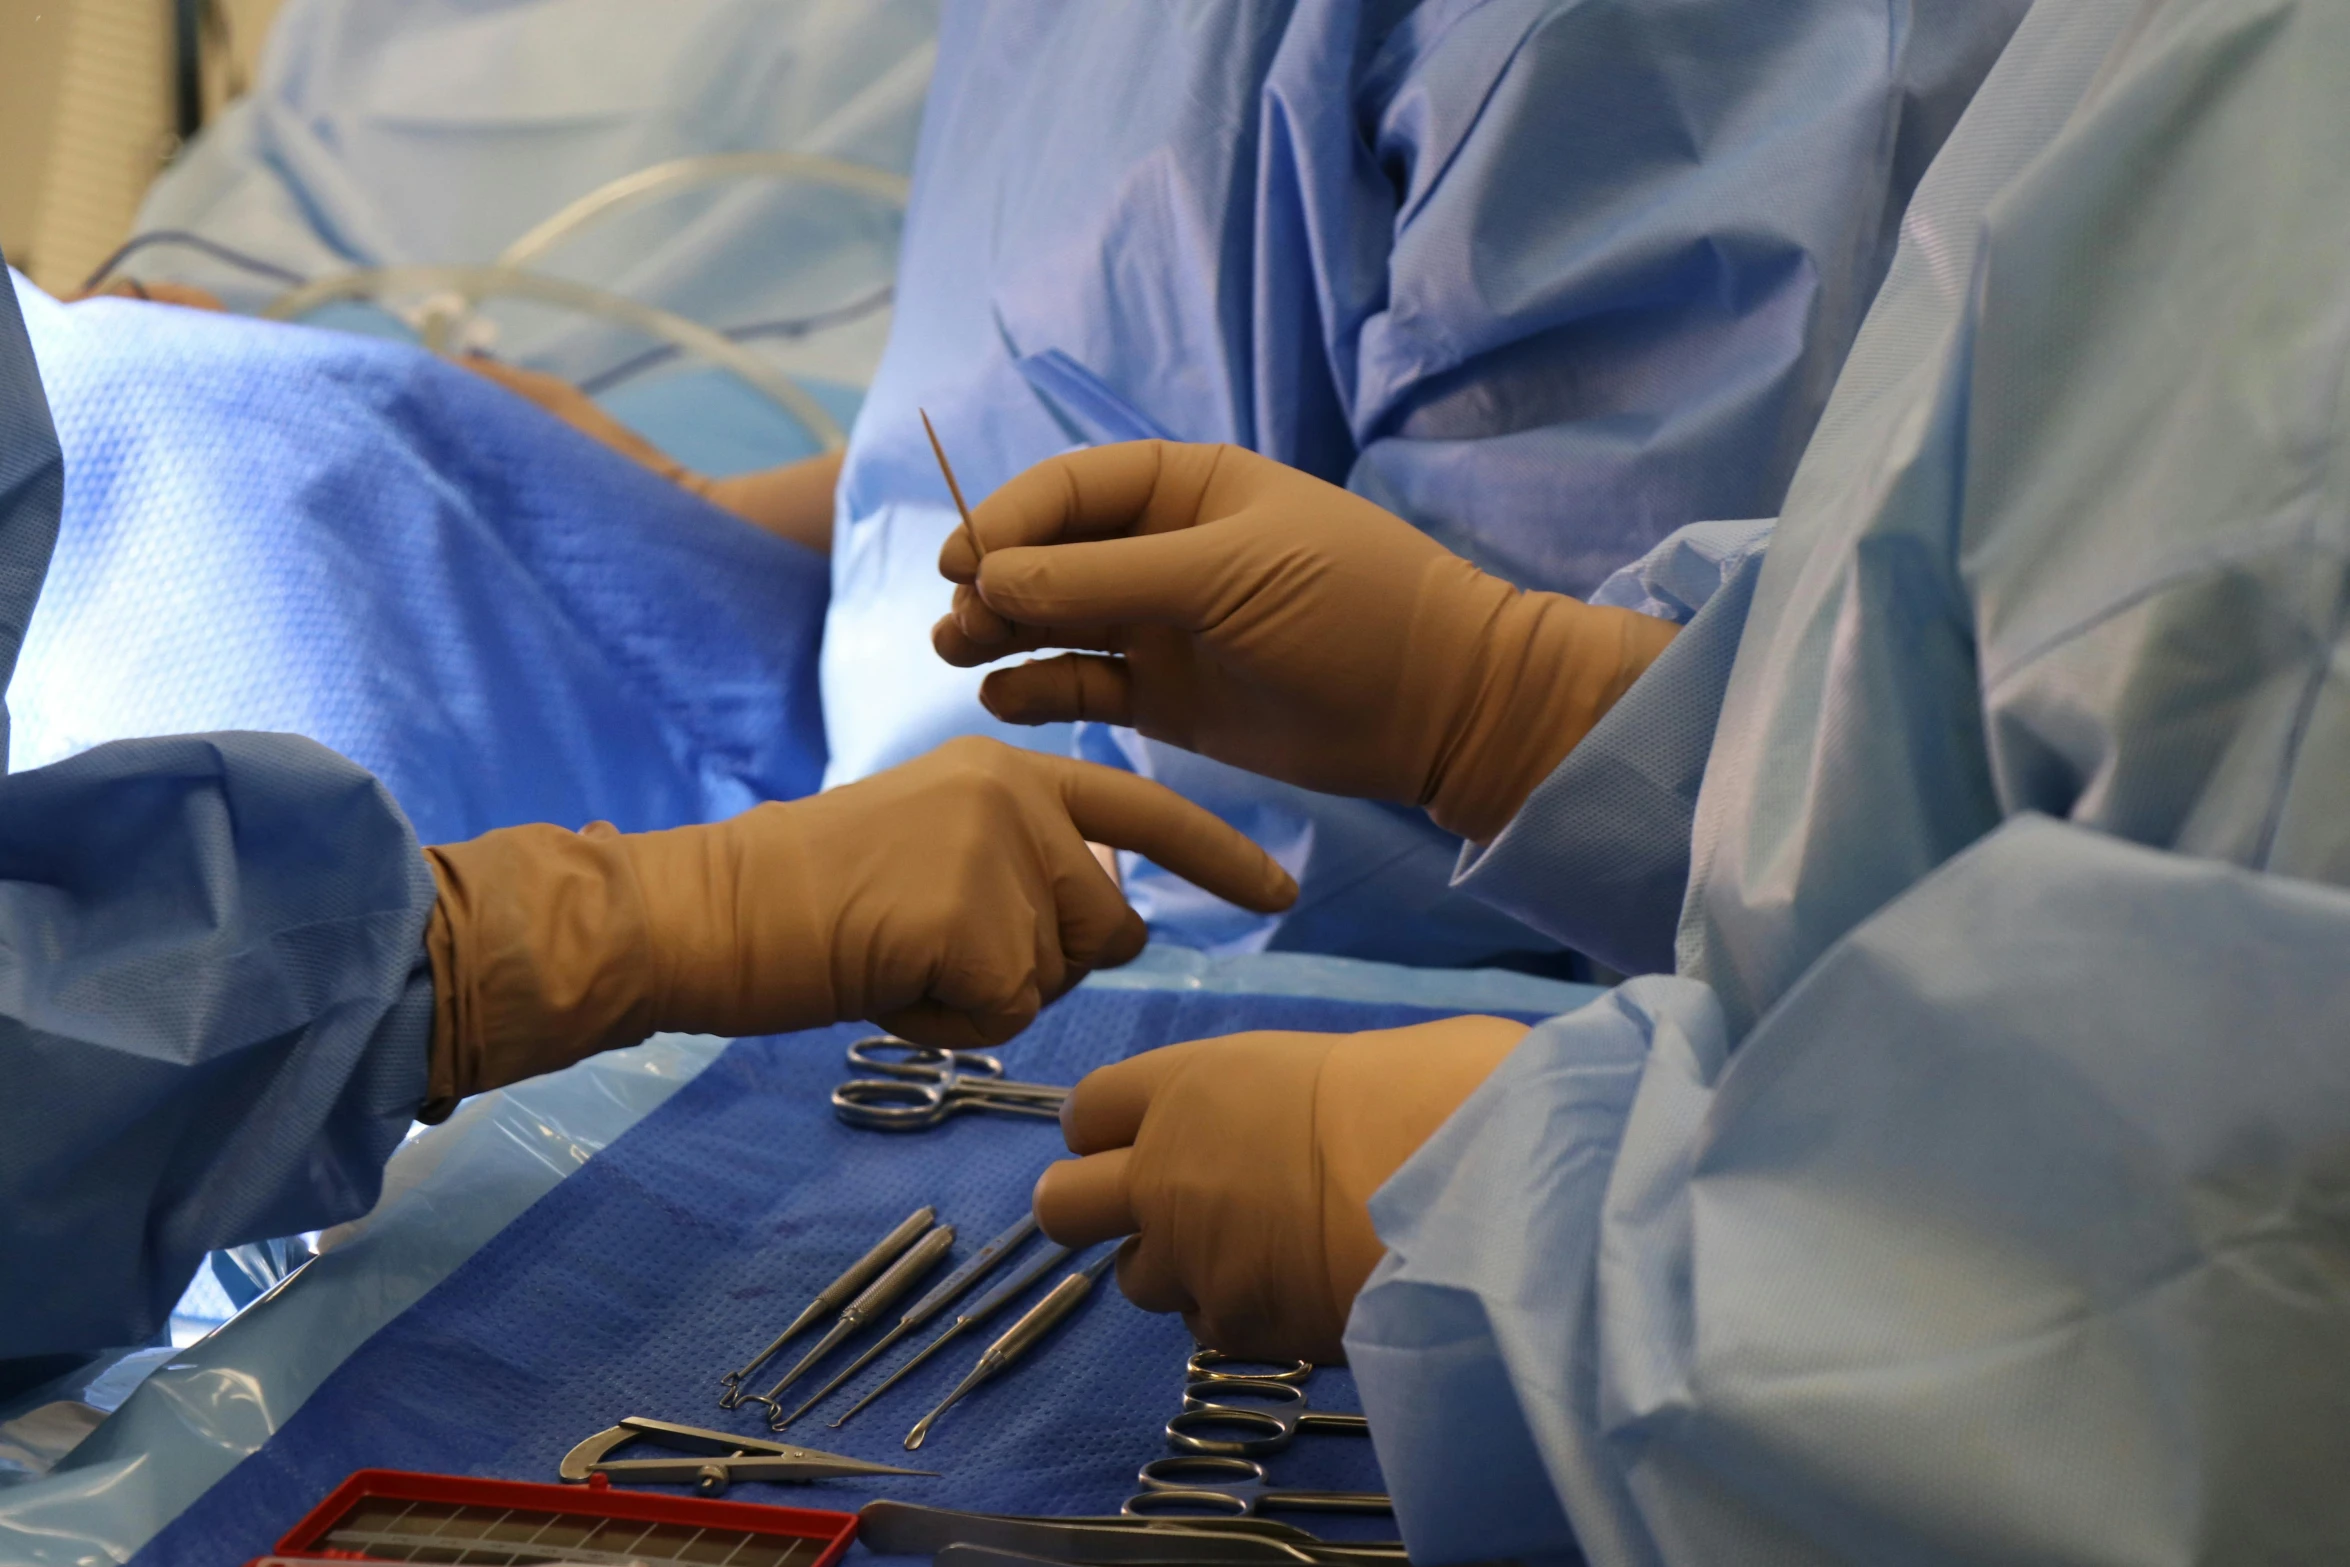 medical workers in sterile garb operating dental instruments